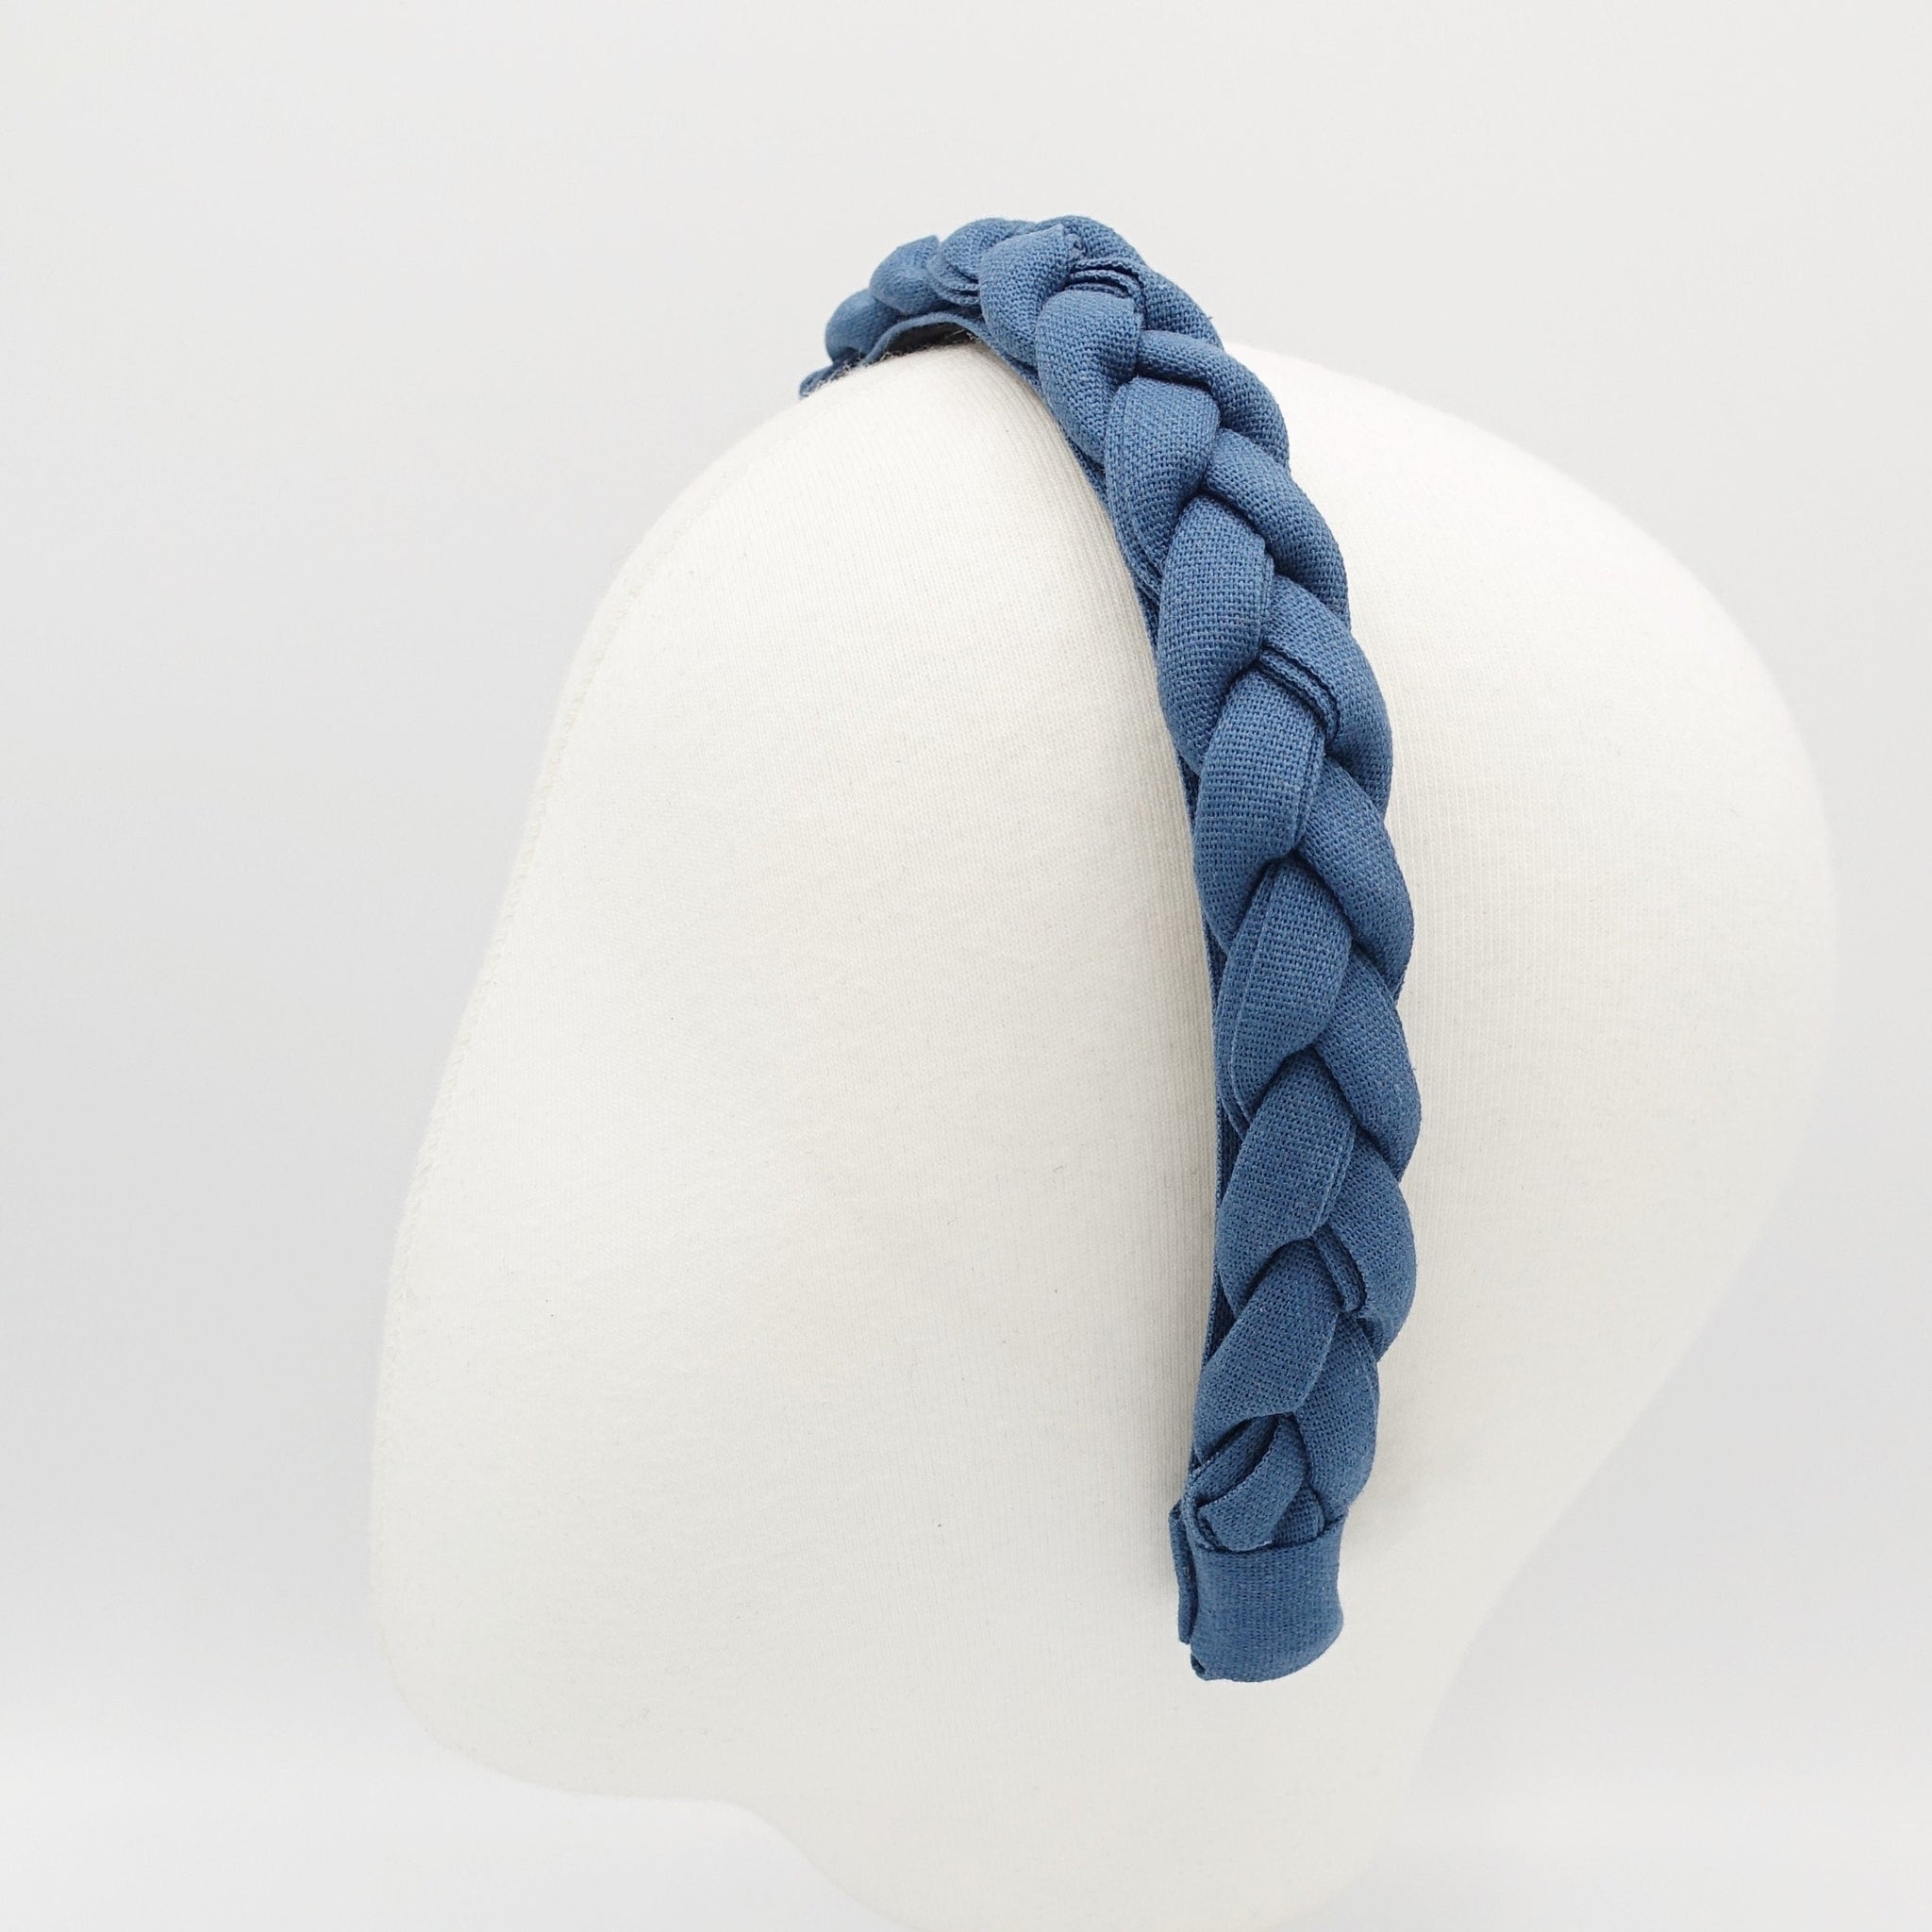 veryshine.com Headband Blue narrow braided headband linen braided hairband simple hair accessory for women